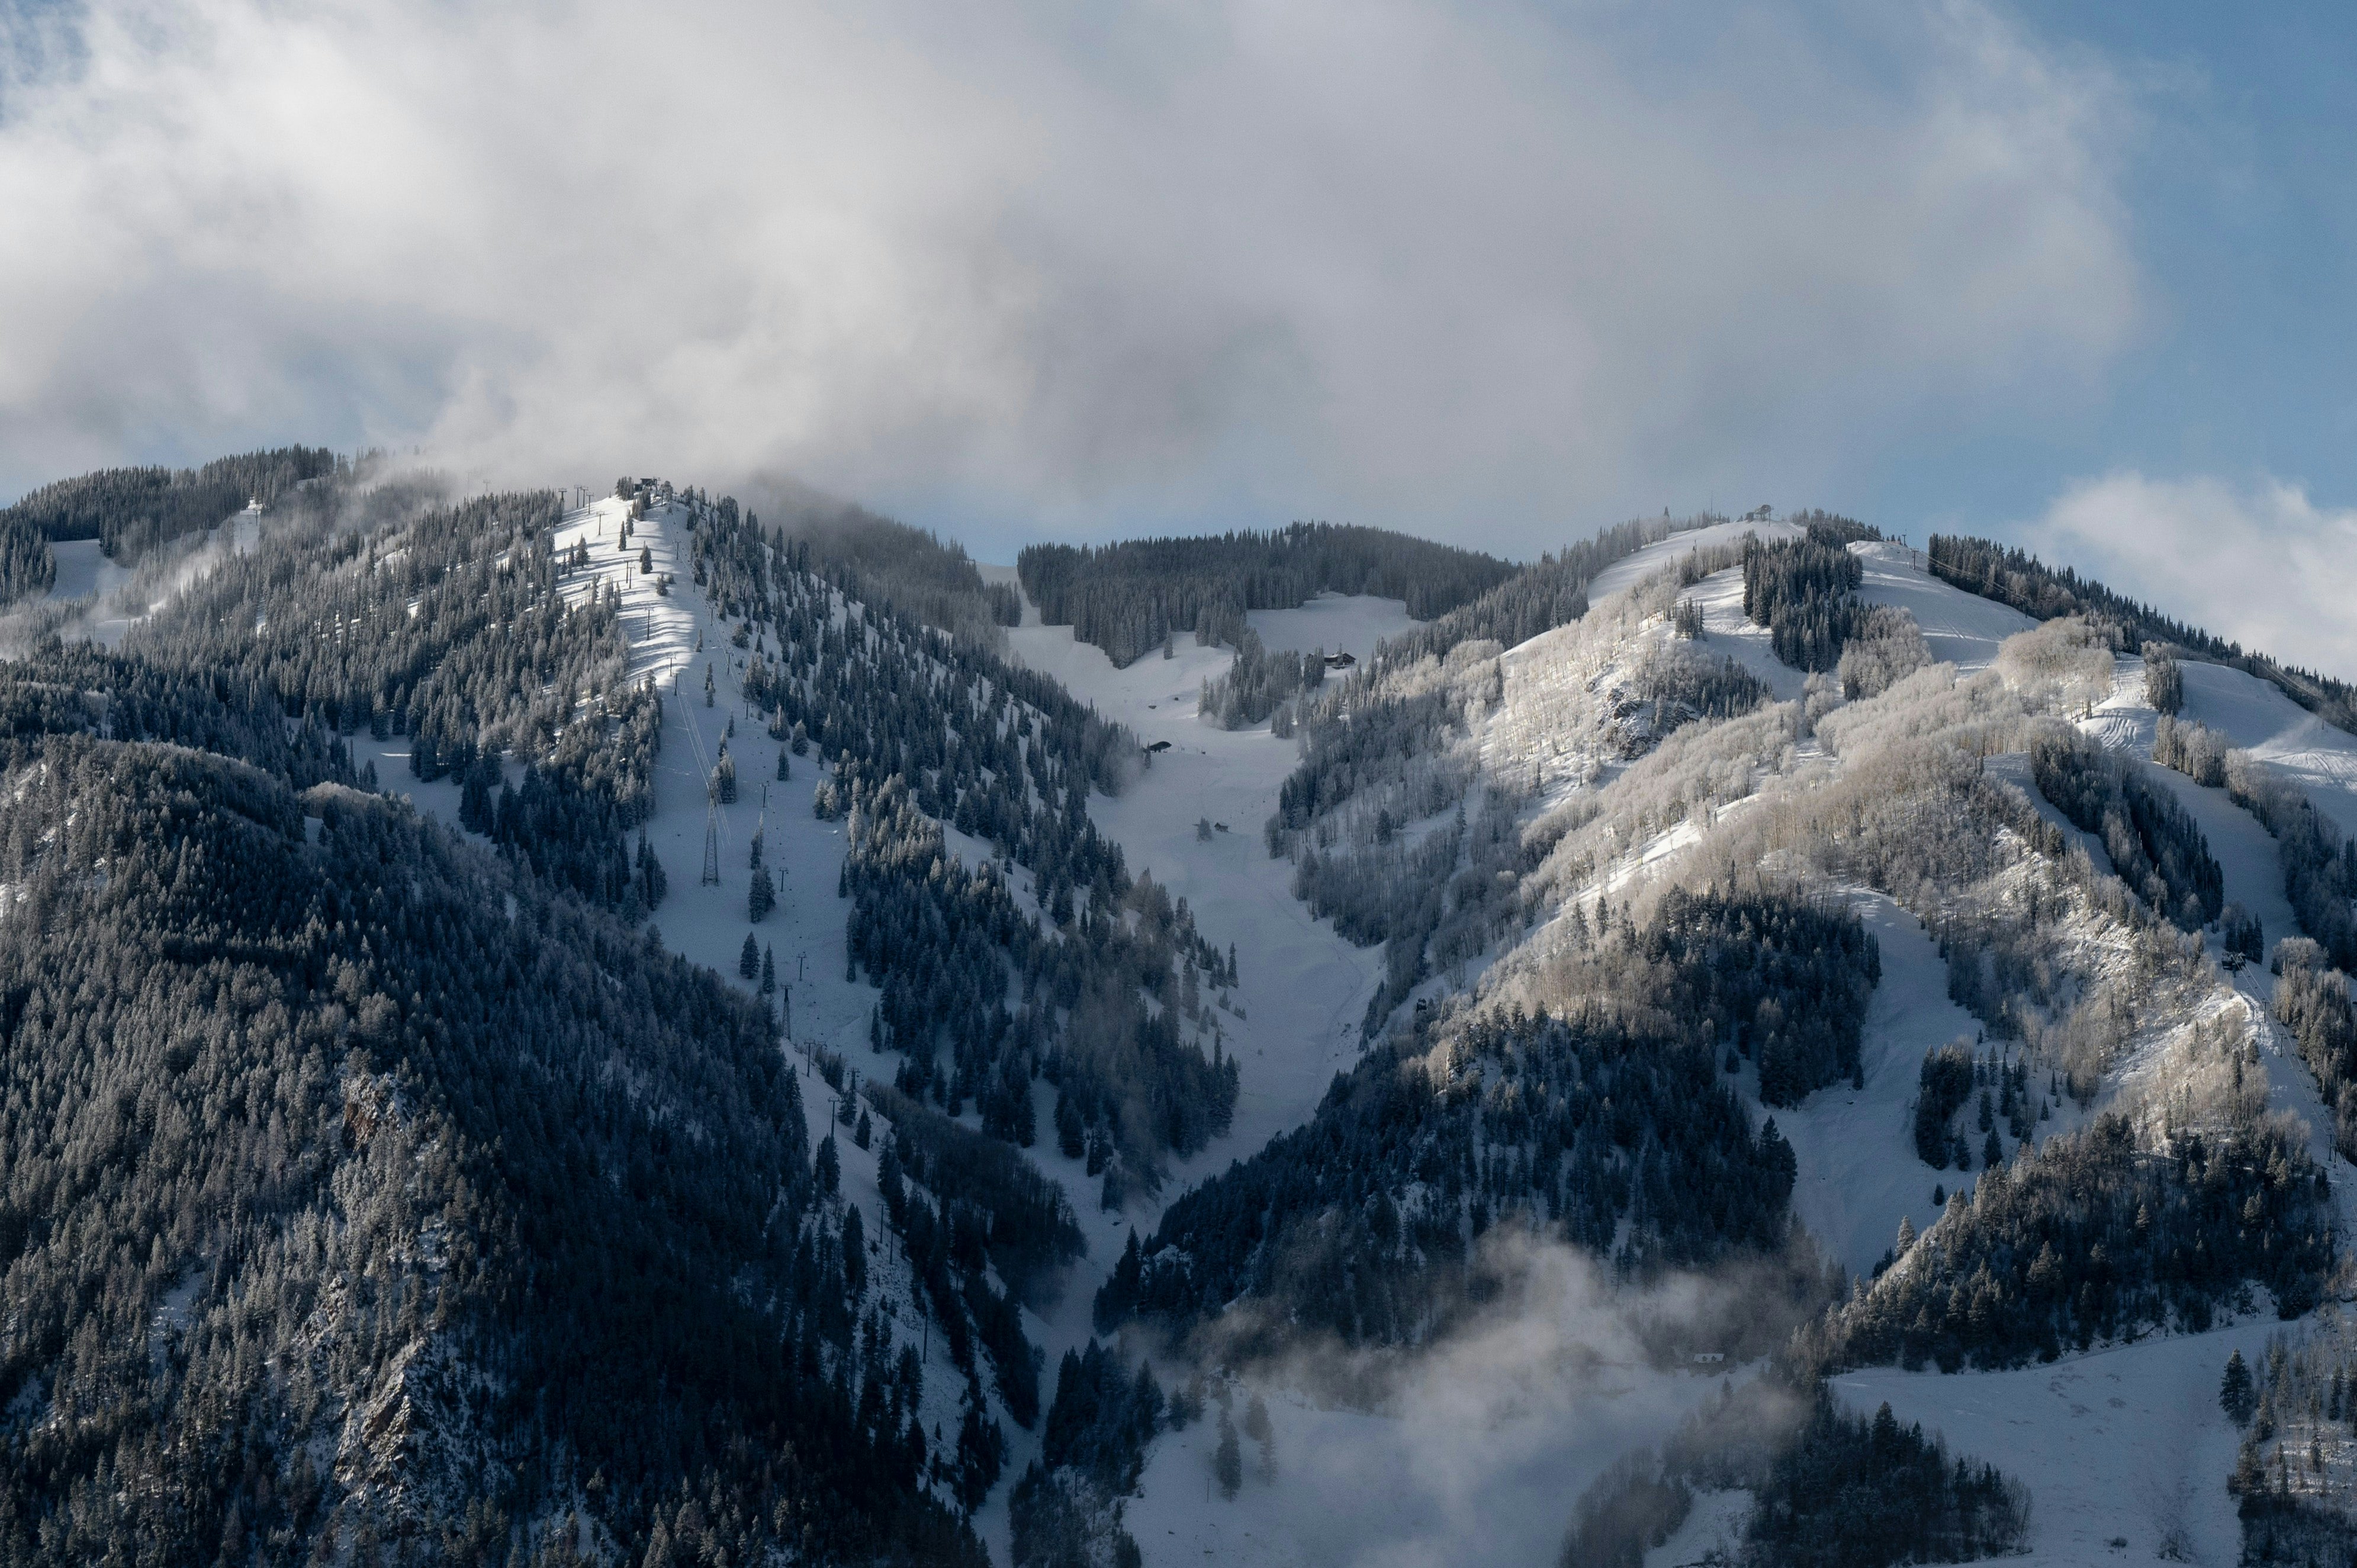 Aspen Snowmass Ski Resort, Colorado